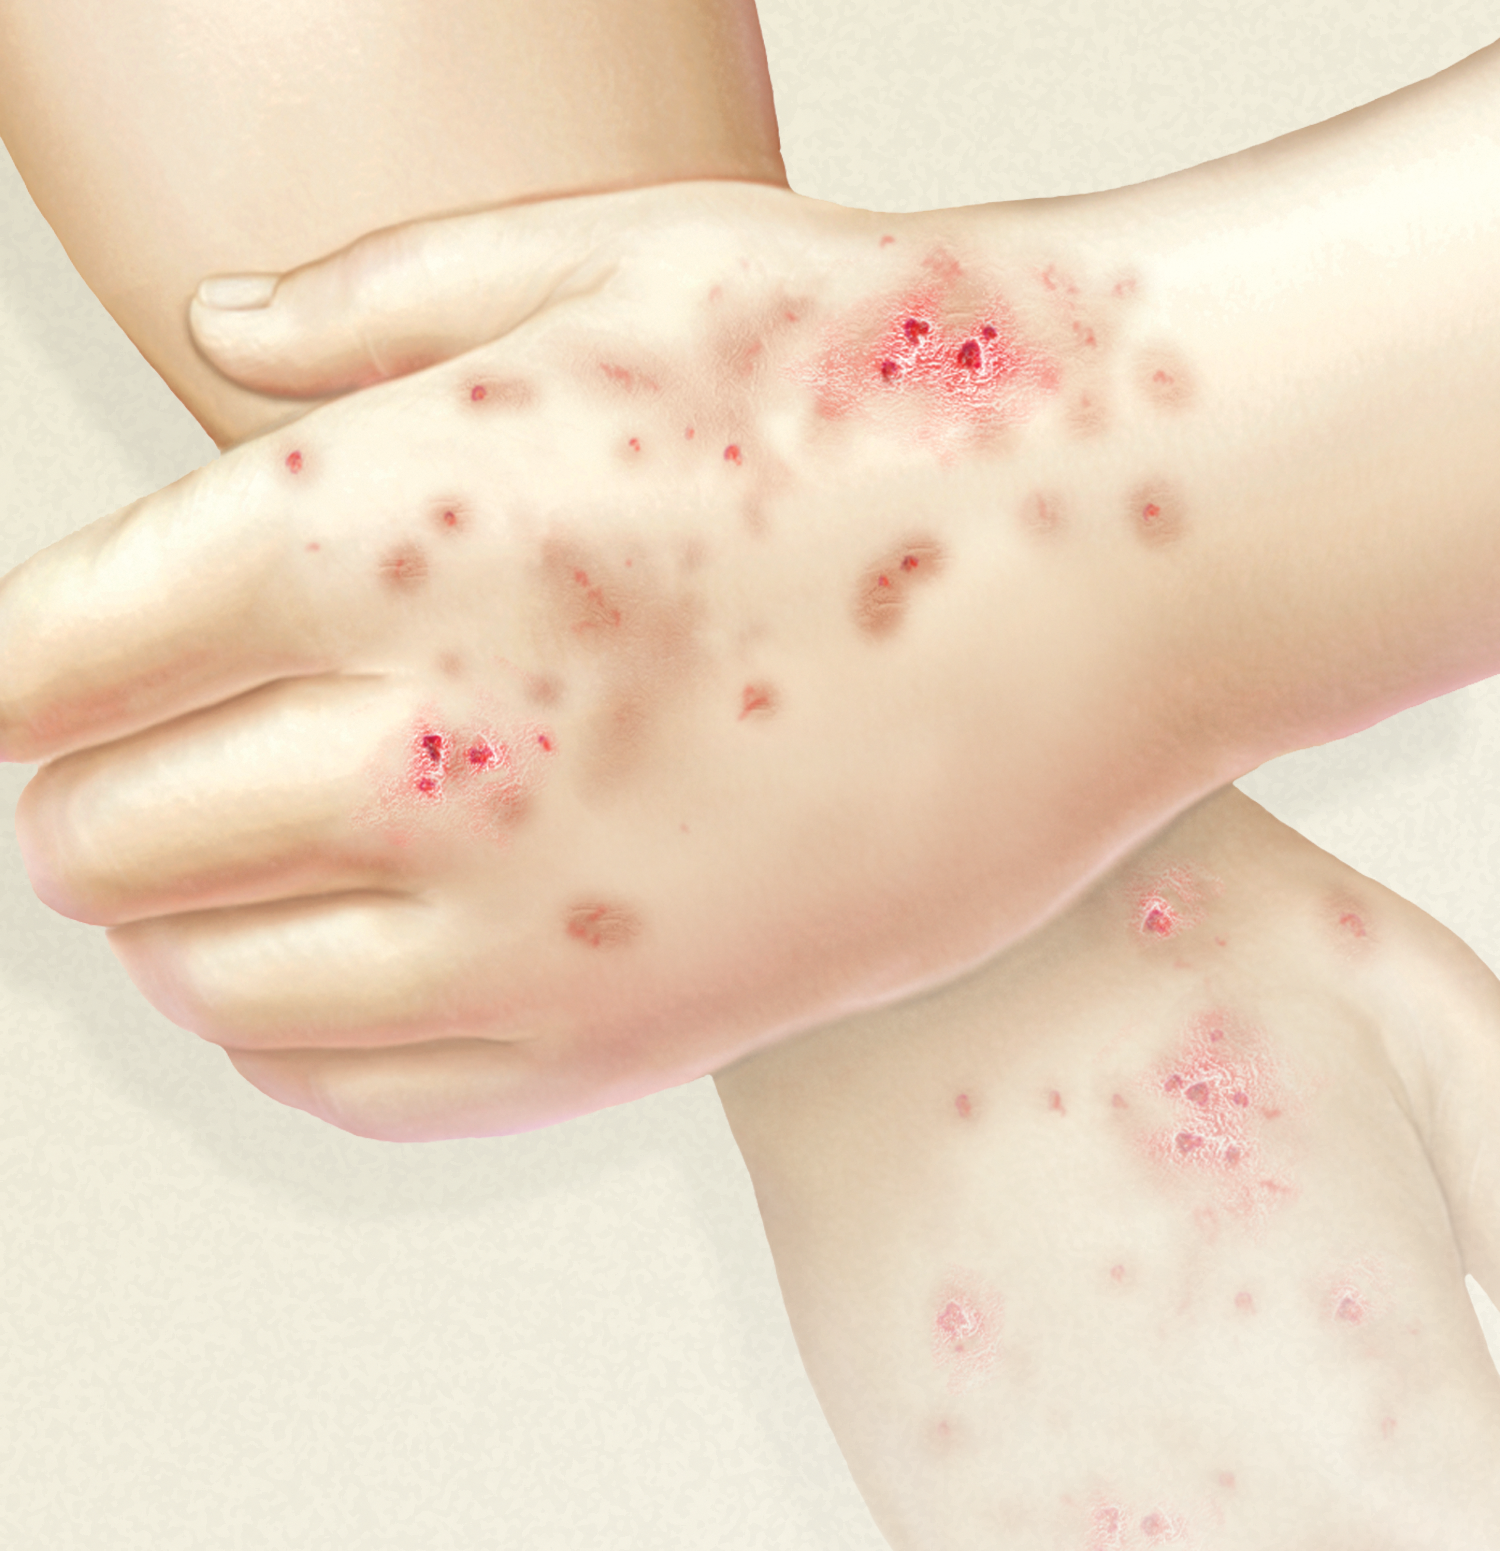 Eczema/Atopic Dermatitis, Emergency Medicine